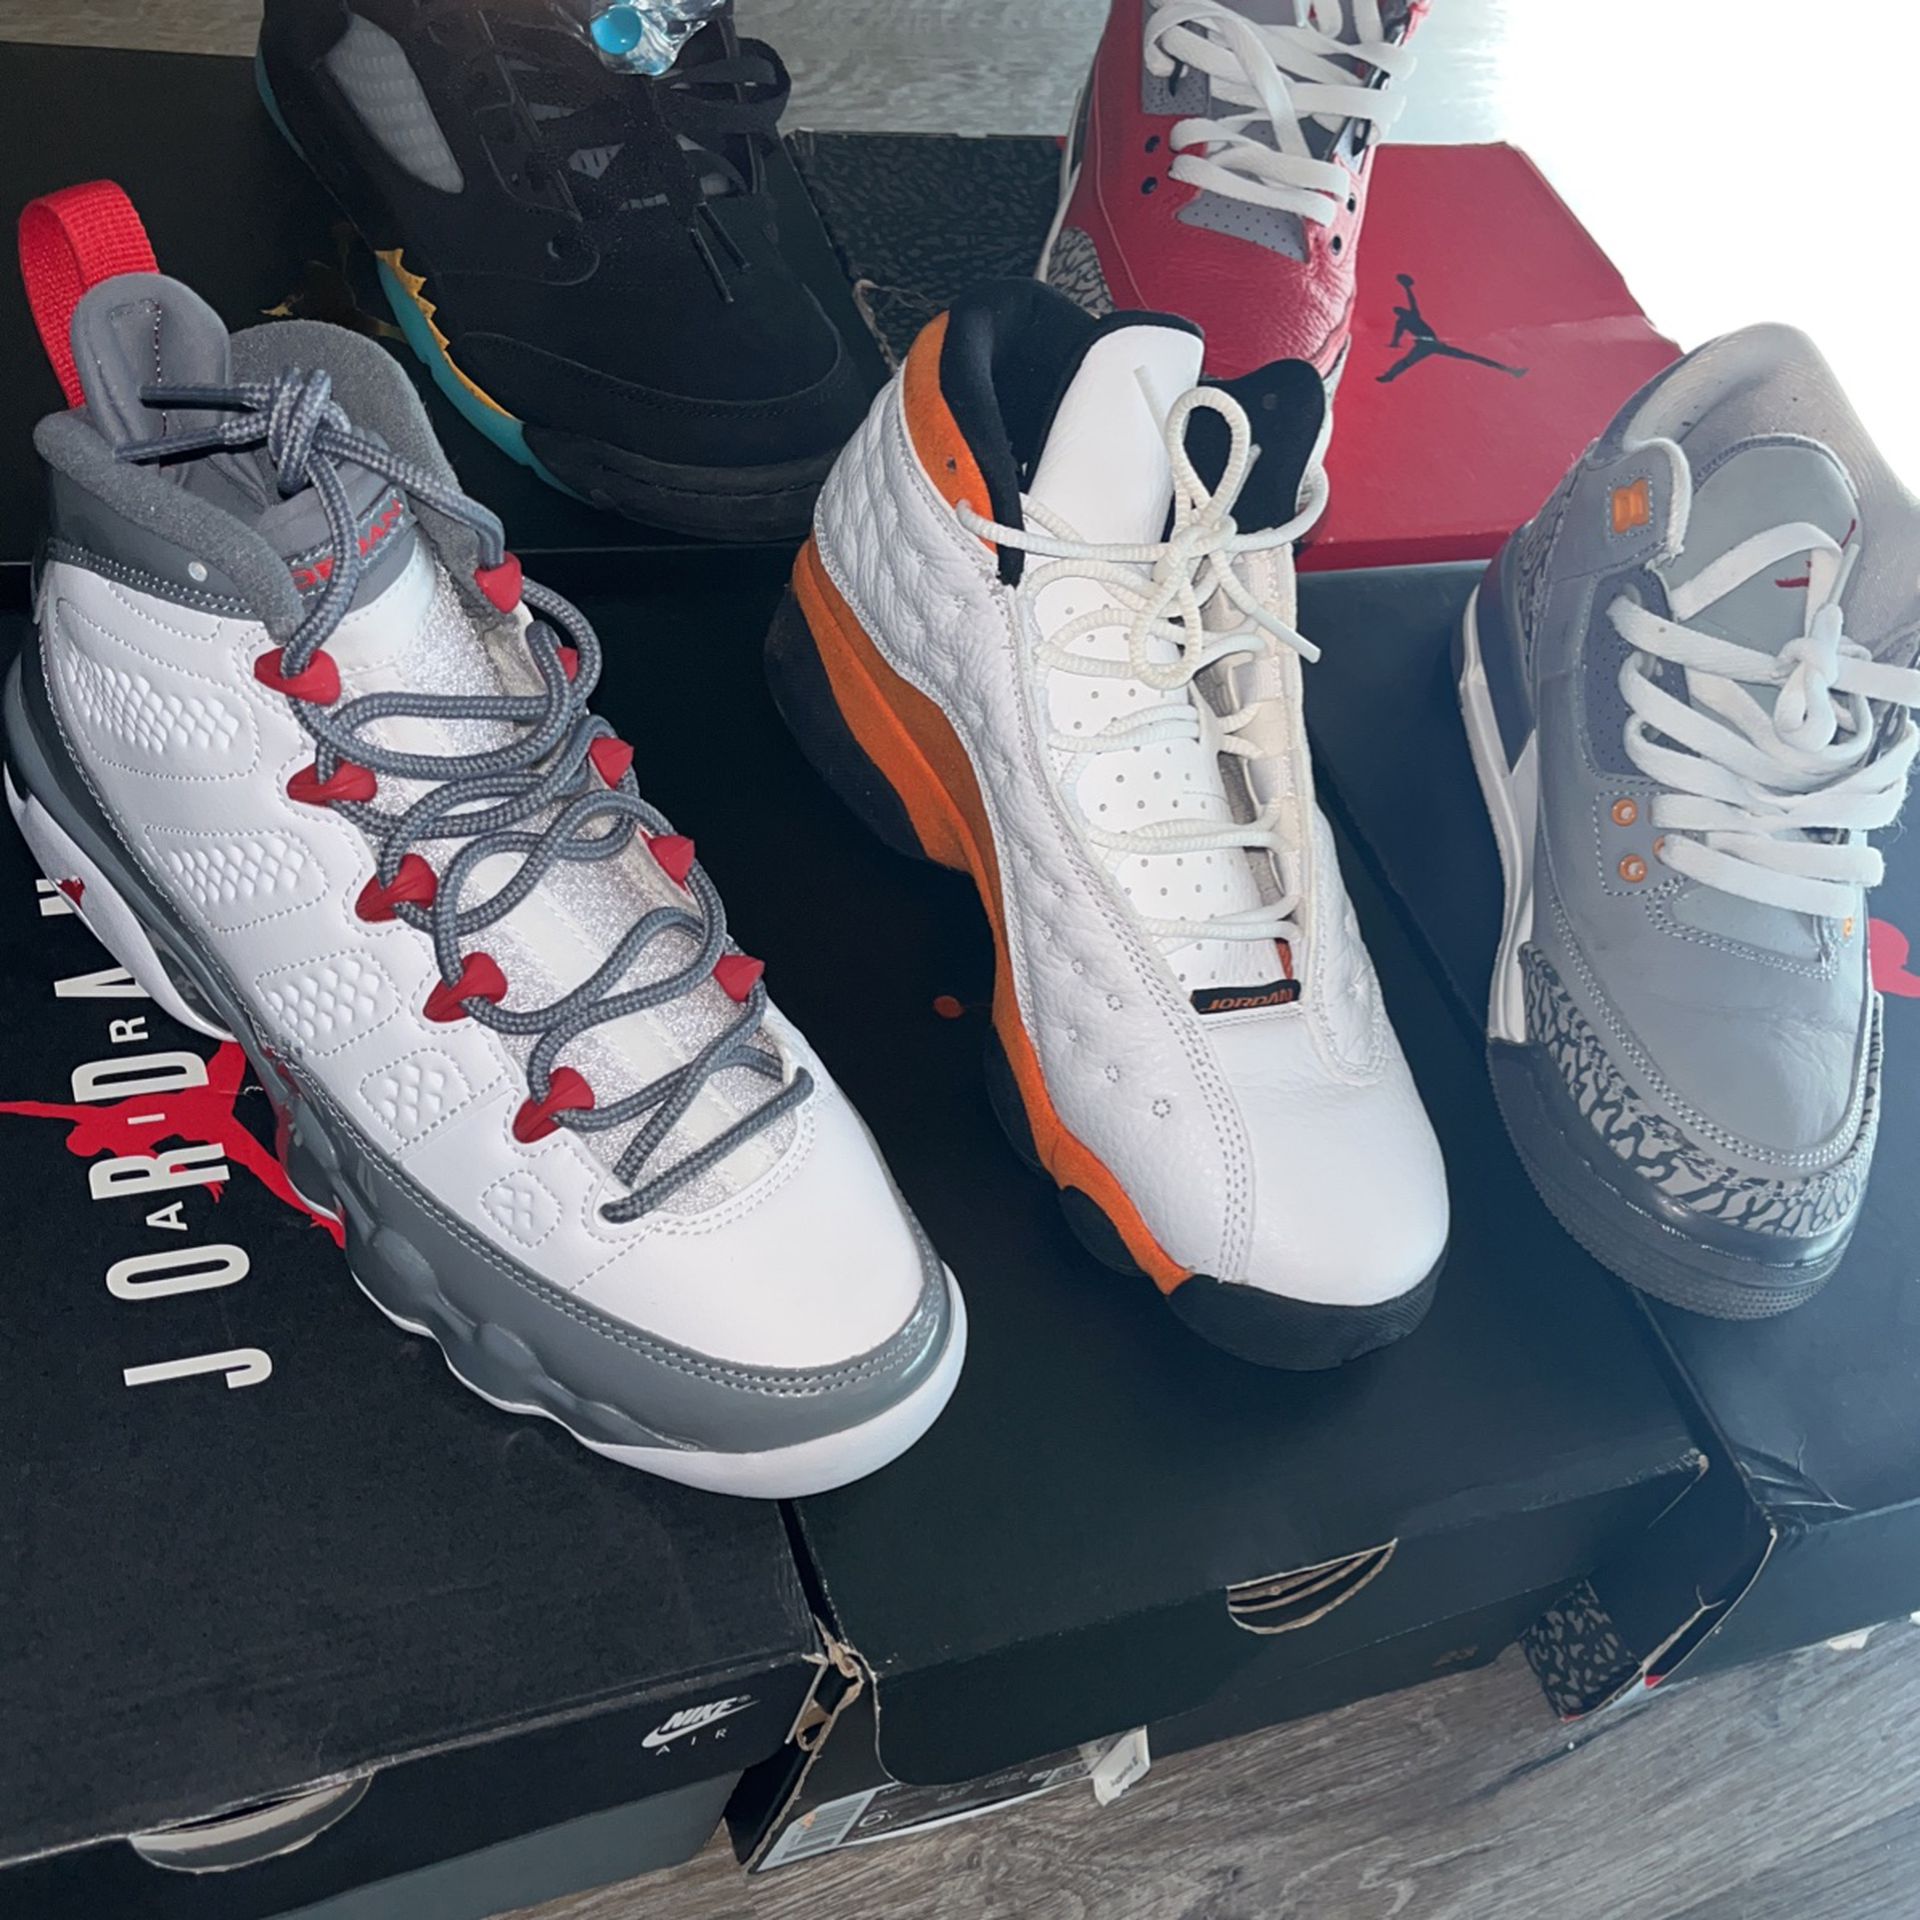 Jordans (450 FOR ALL) for Sale in Tampa, FL - OfferUp